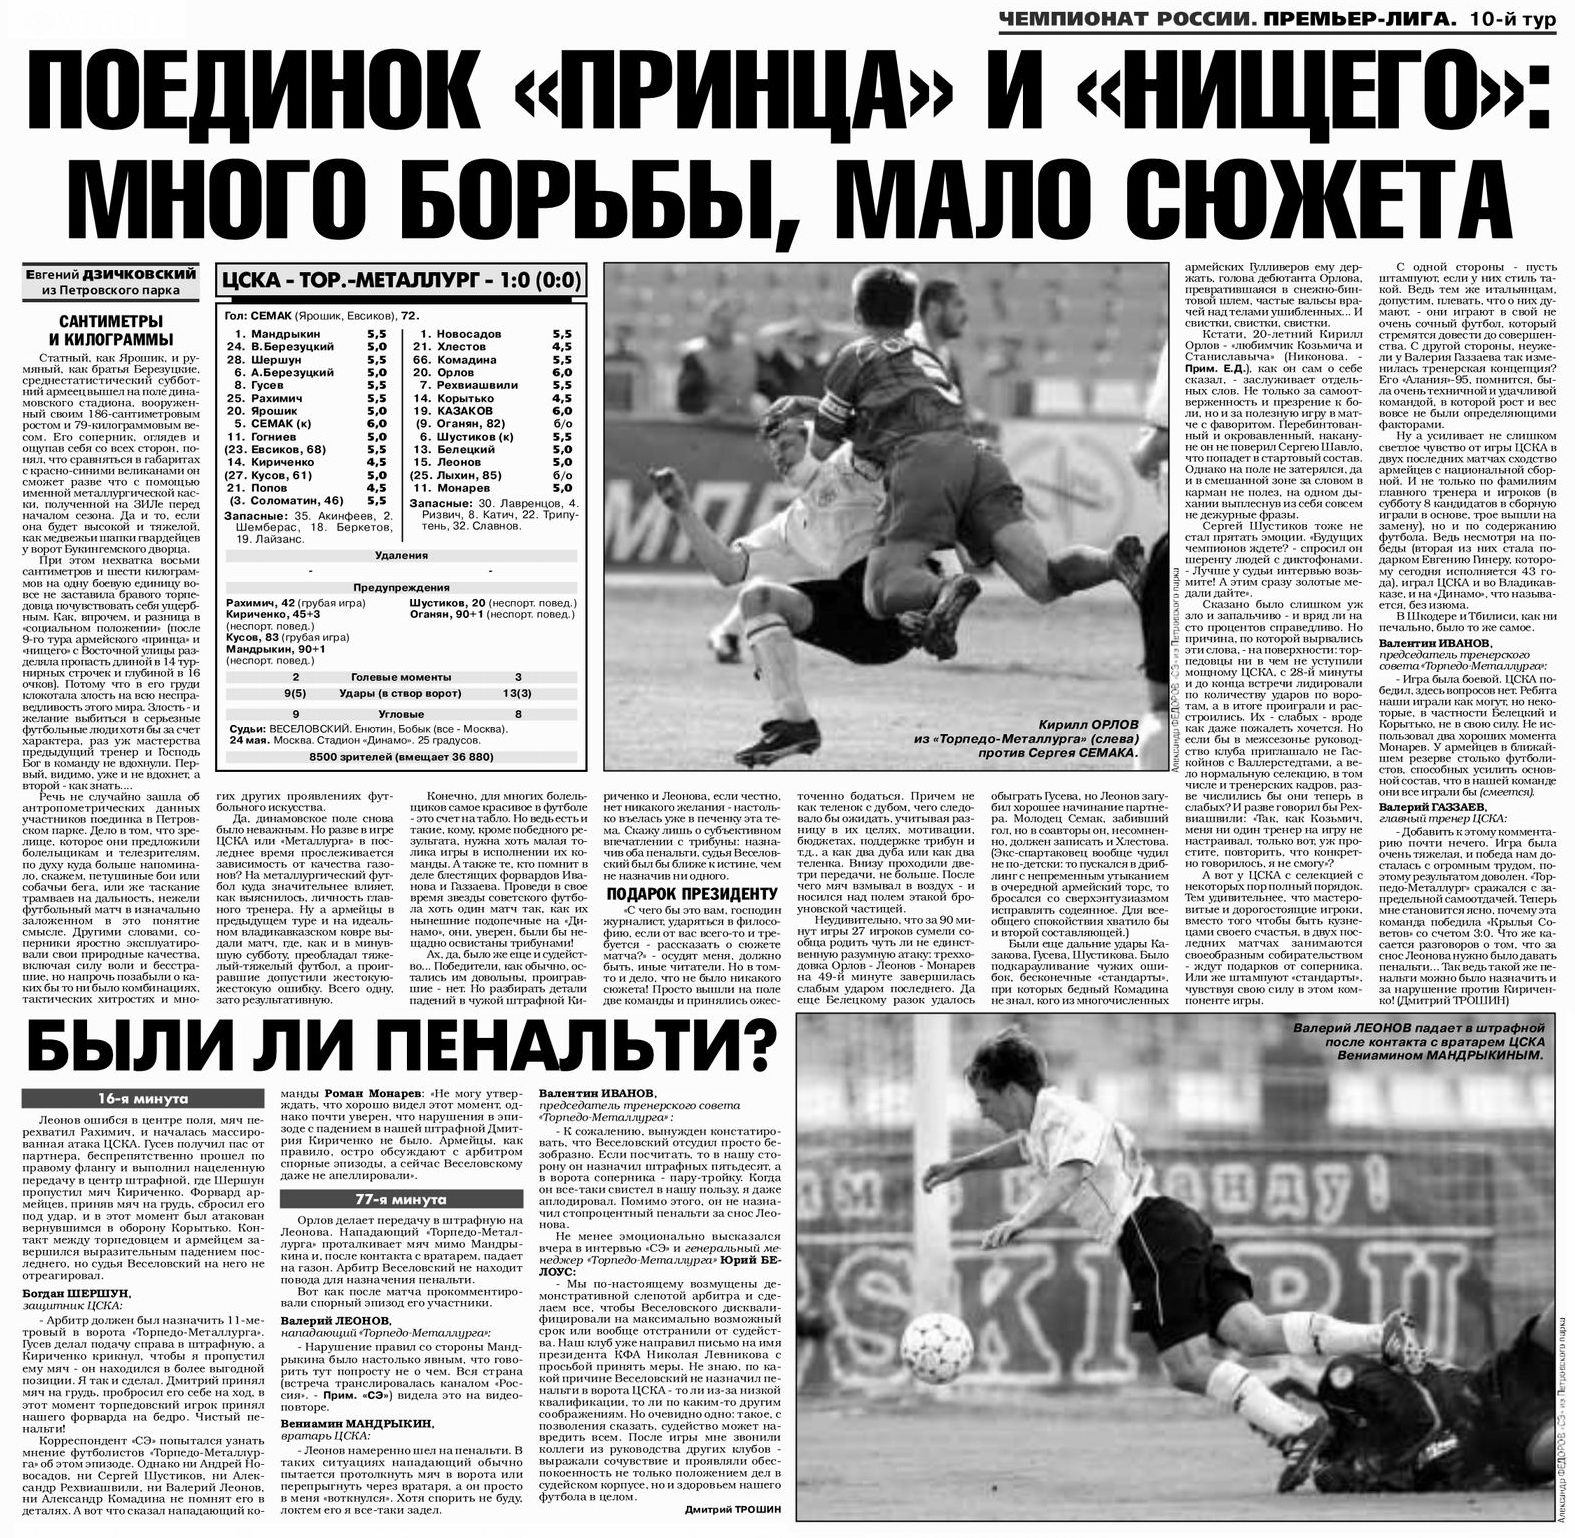 2003-05-24.CSKA-TorpedoMetallurg.1